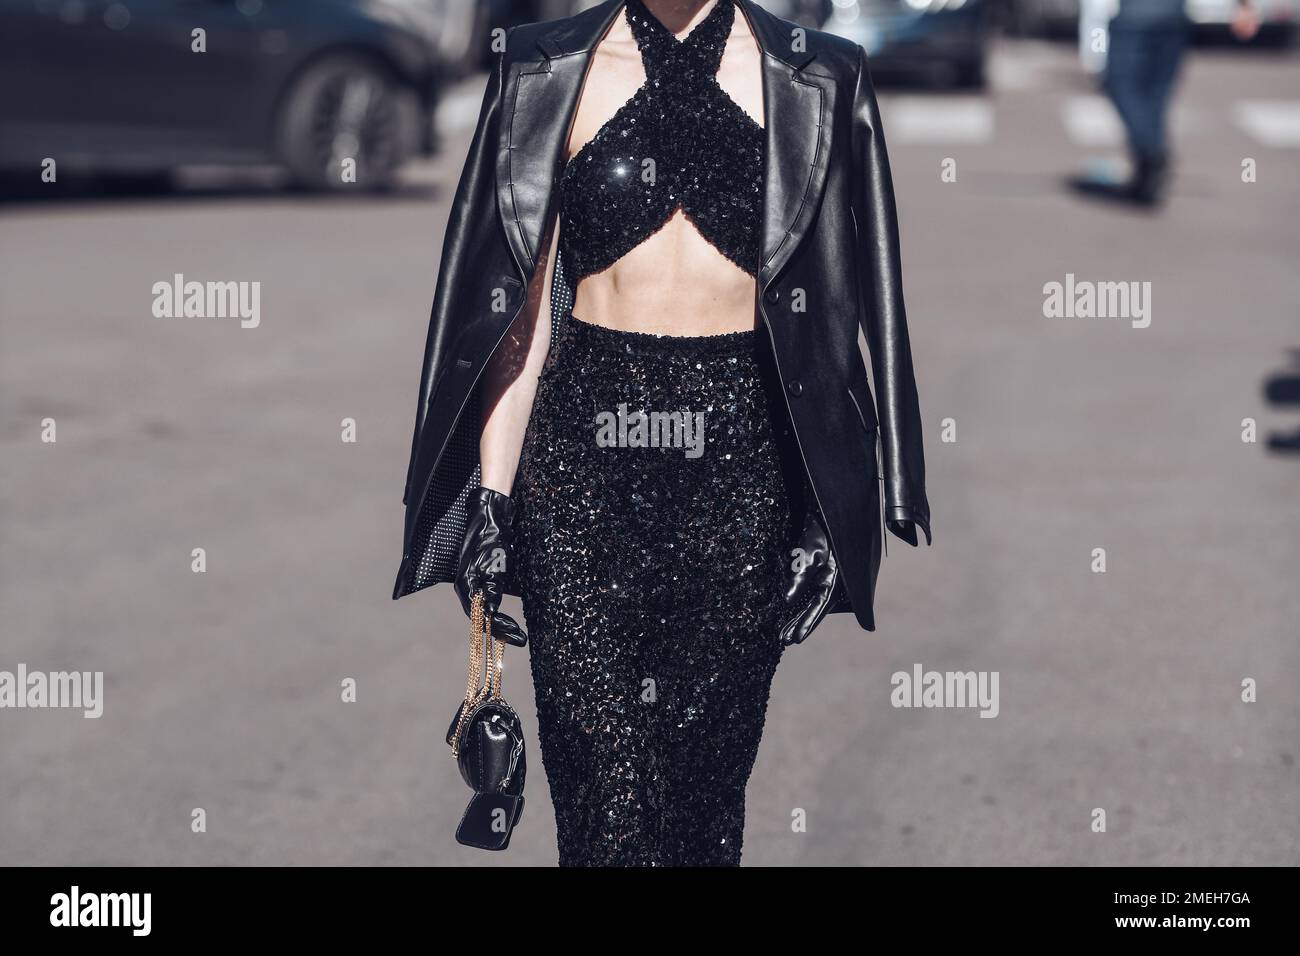 Milan, Italy - February 26, 2022: Female wearing a black glitter dress, black purse and elegant shoes. Stock Photo